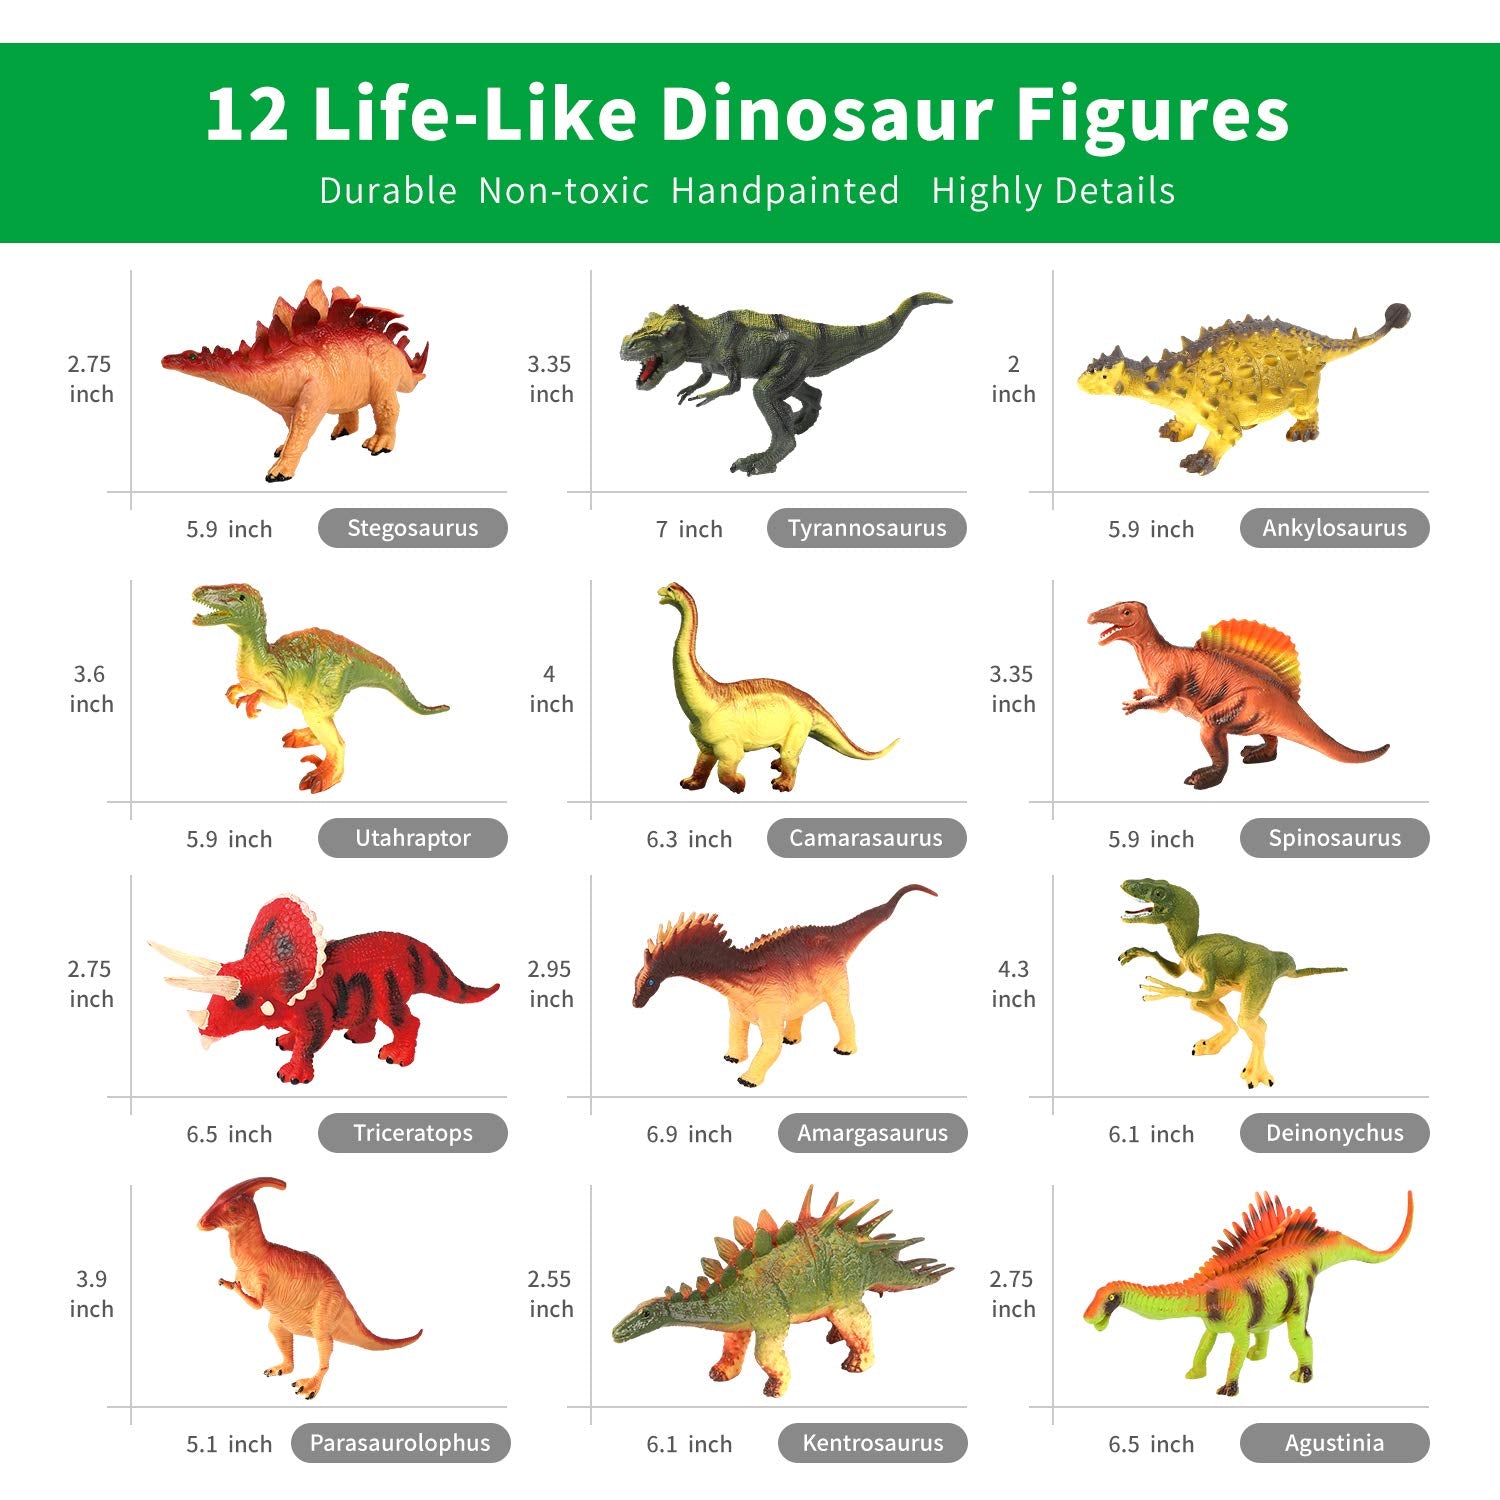 My Dinosaur Playbook